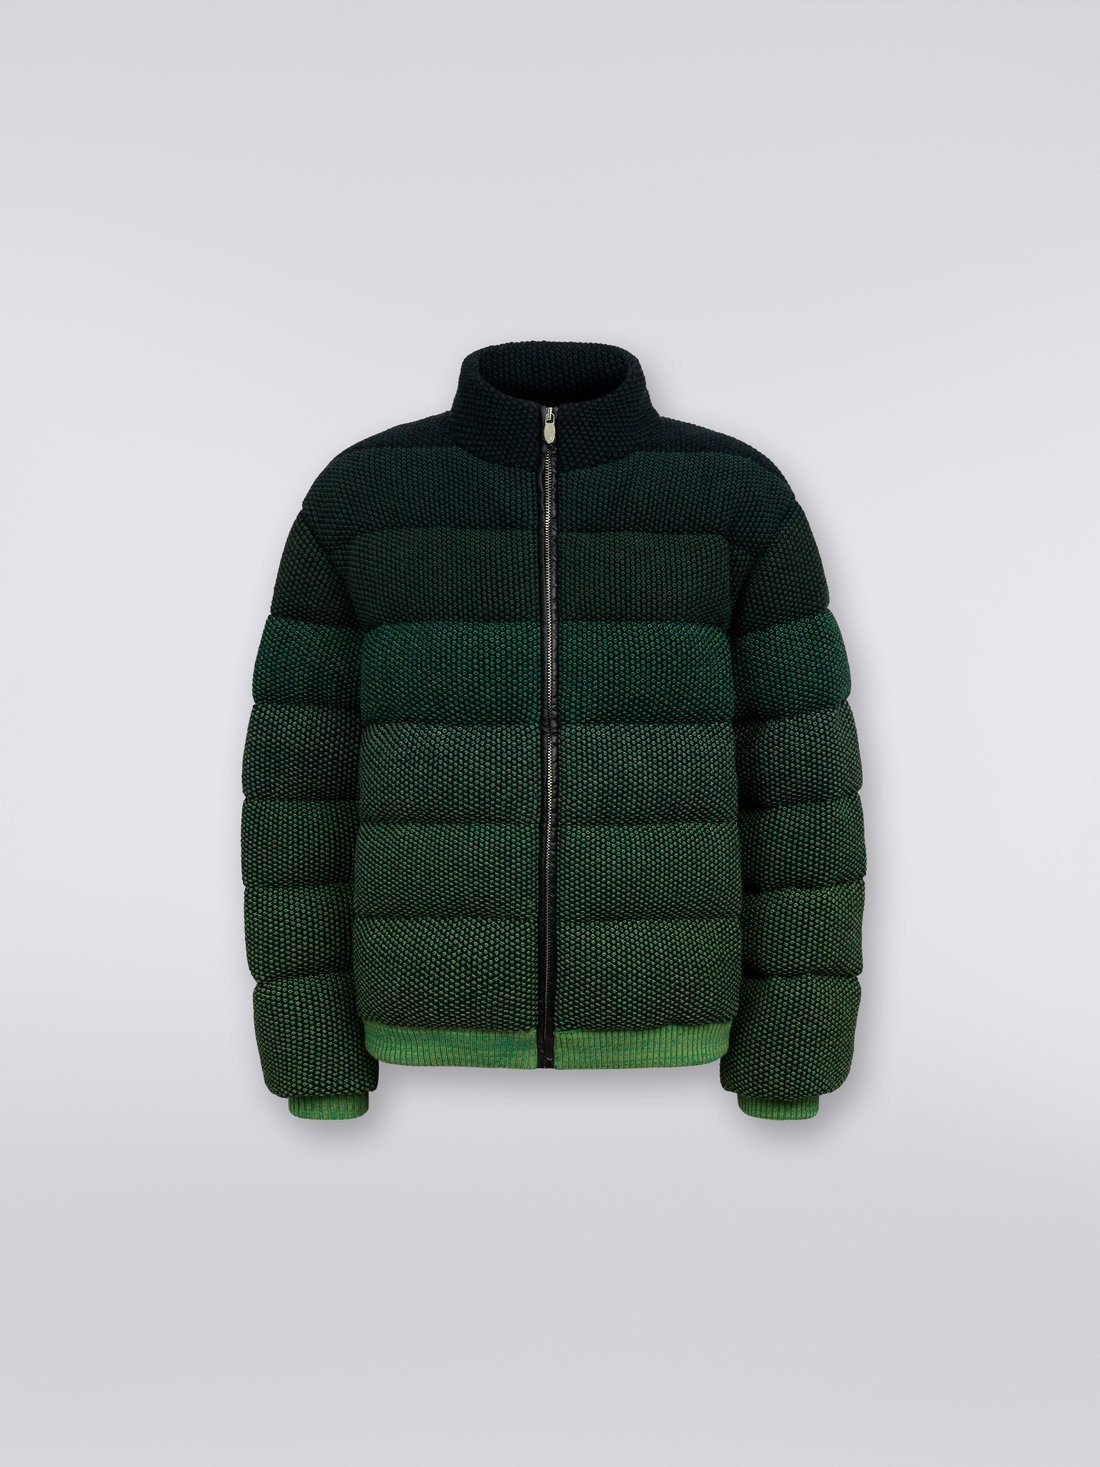 Cropped jacket in dégradé padded cotton blend, Green  - 0